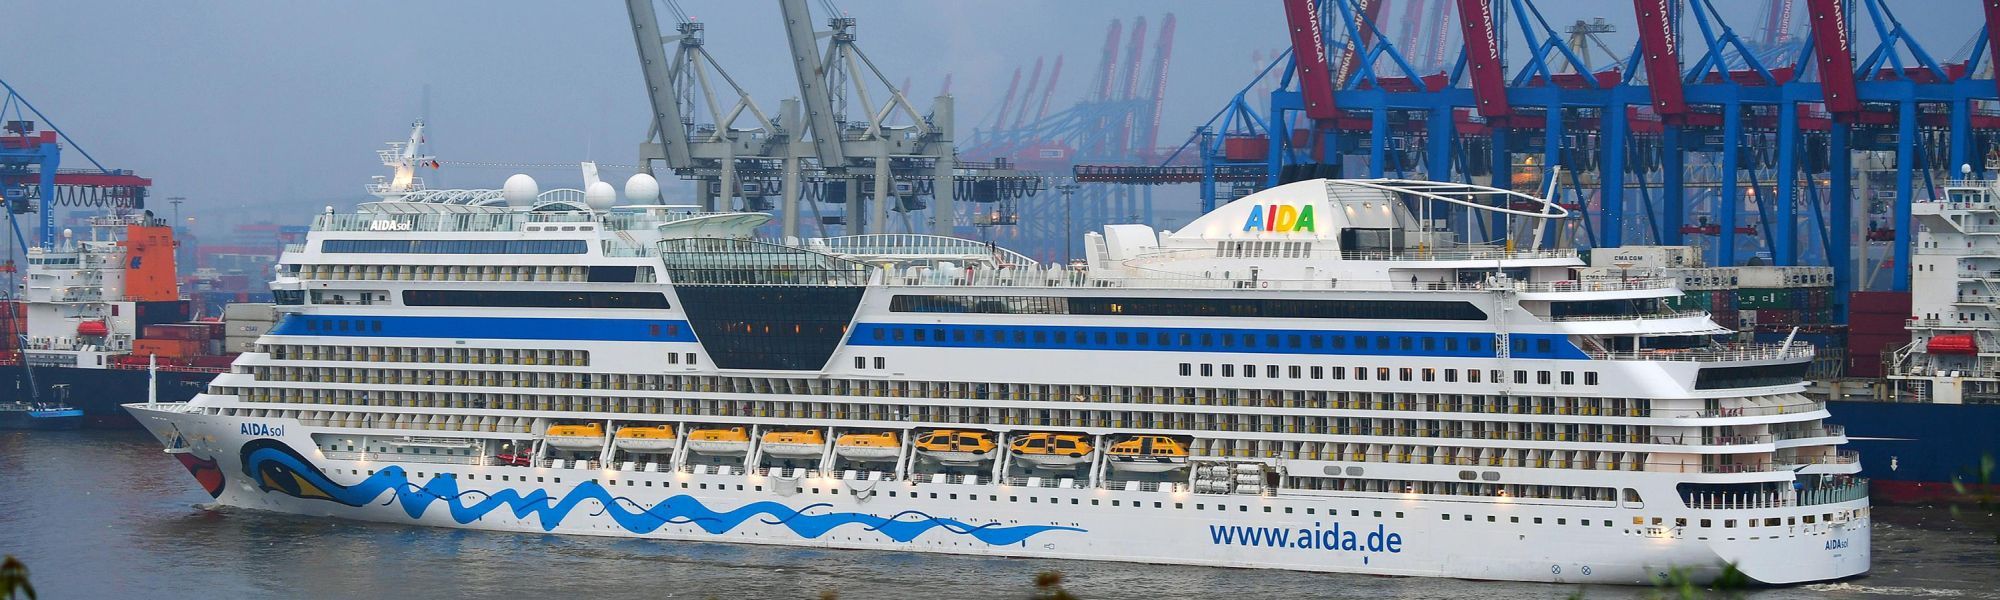 Cruise Traffic Forecast for the Port of Hamburg